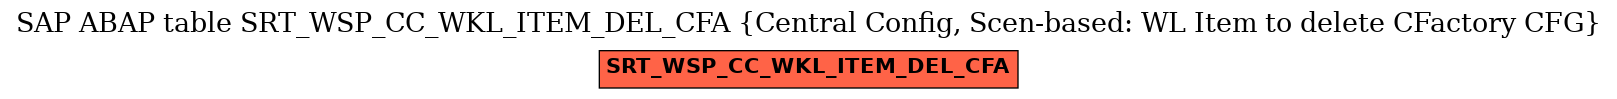 E-R Diagram for table SRT_WSP_CC_WKL_ITEM_DEL_CFA (Central Config, Scen-based: WL Item to delete CFactory CFG)